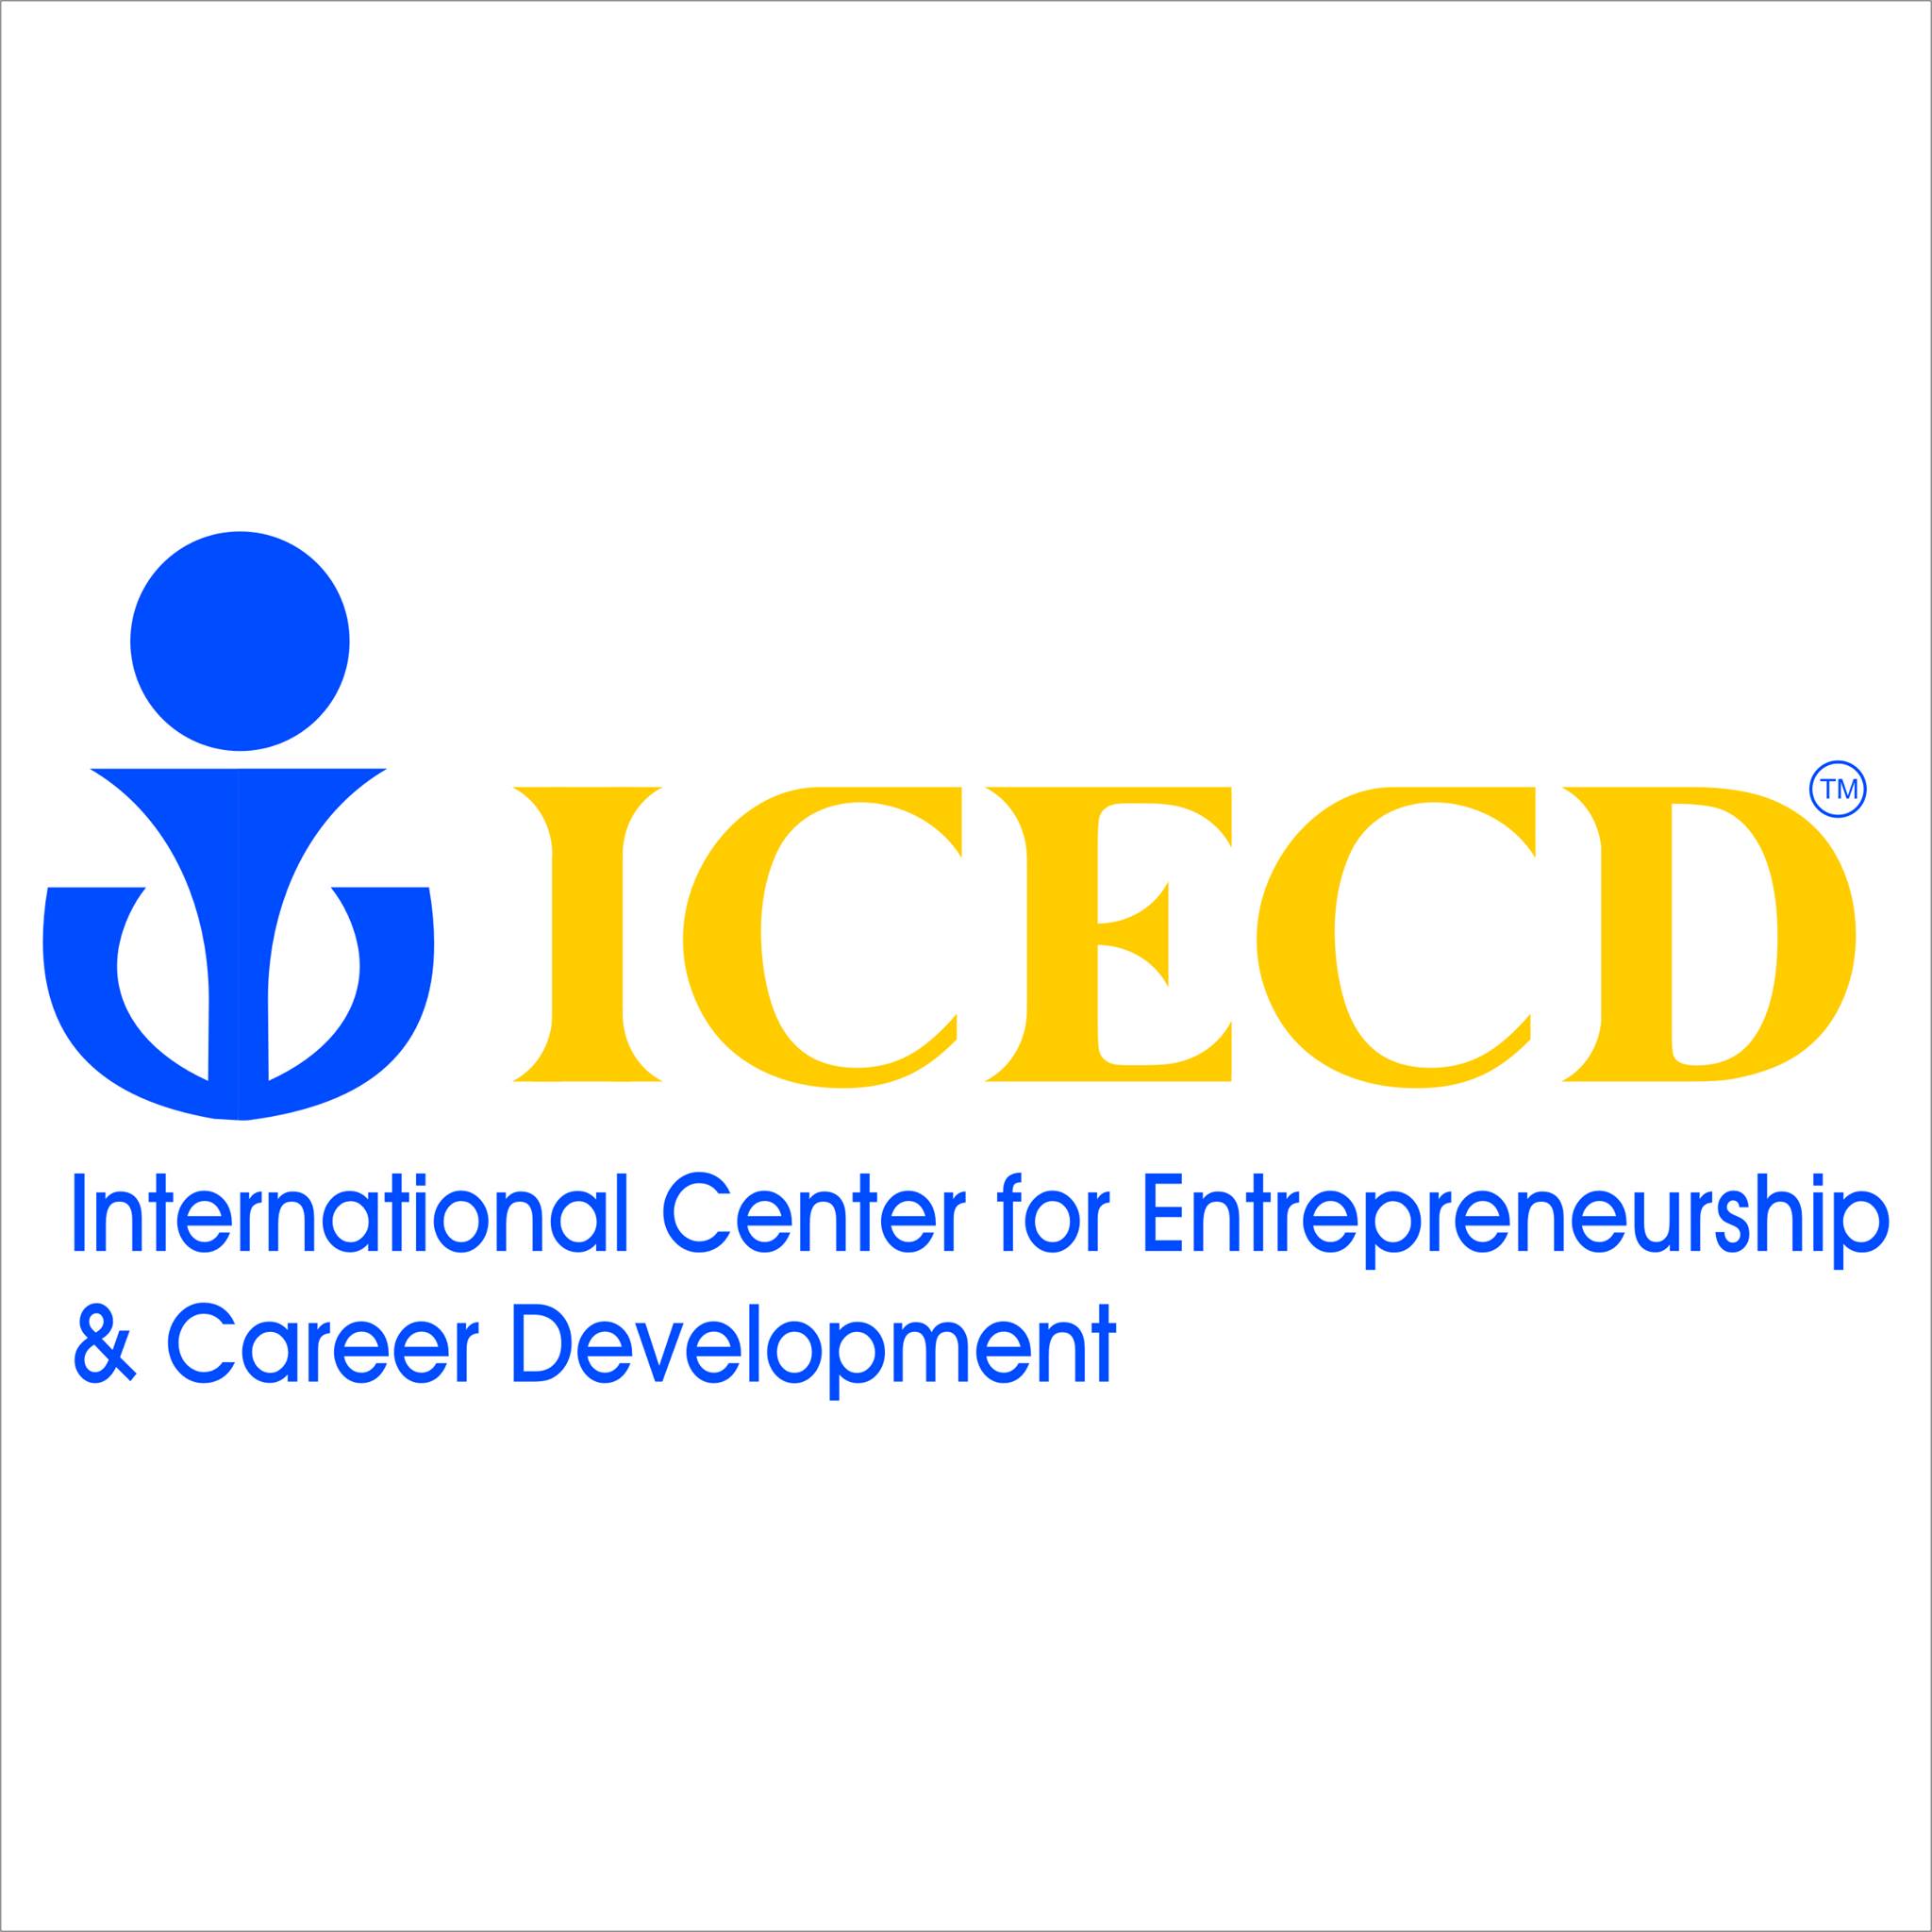 Icecd Logo